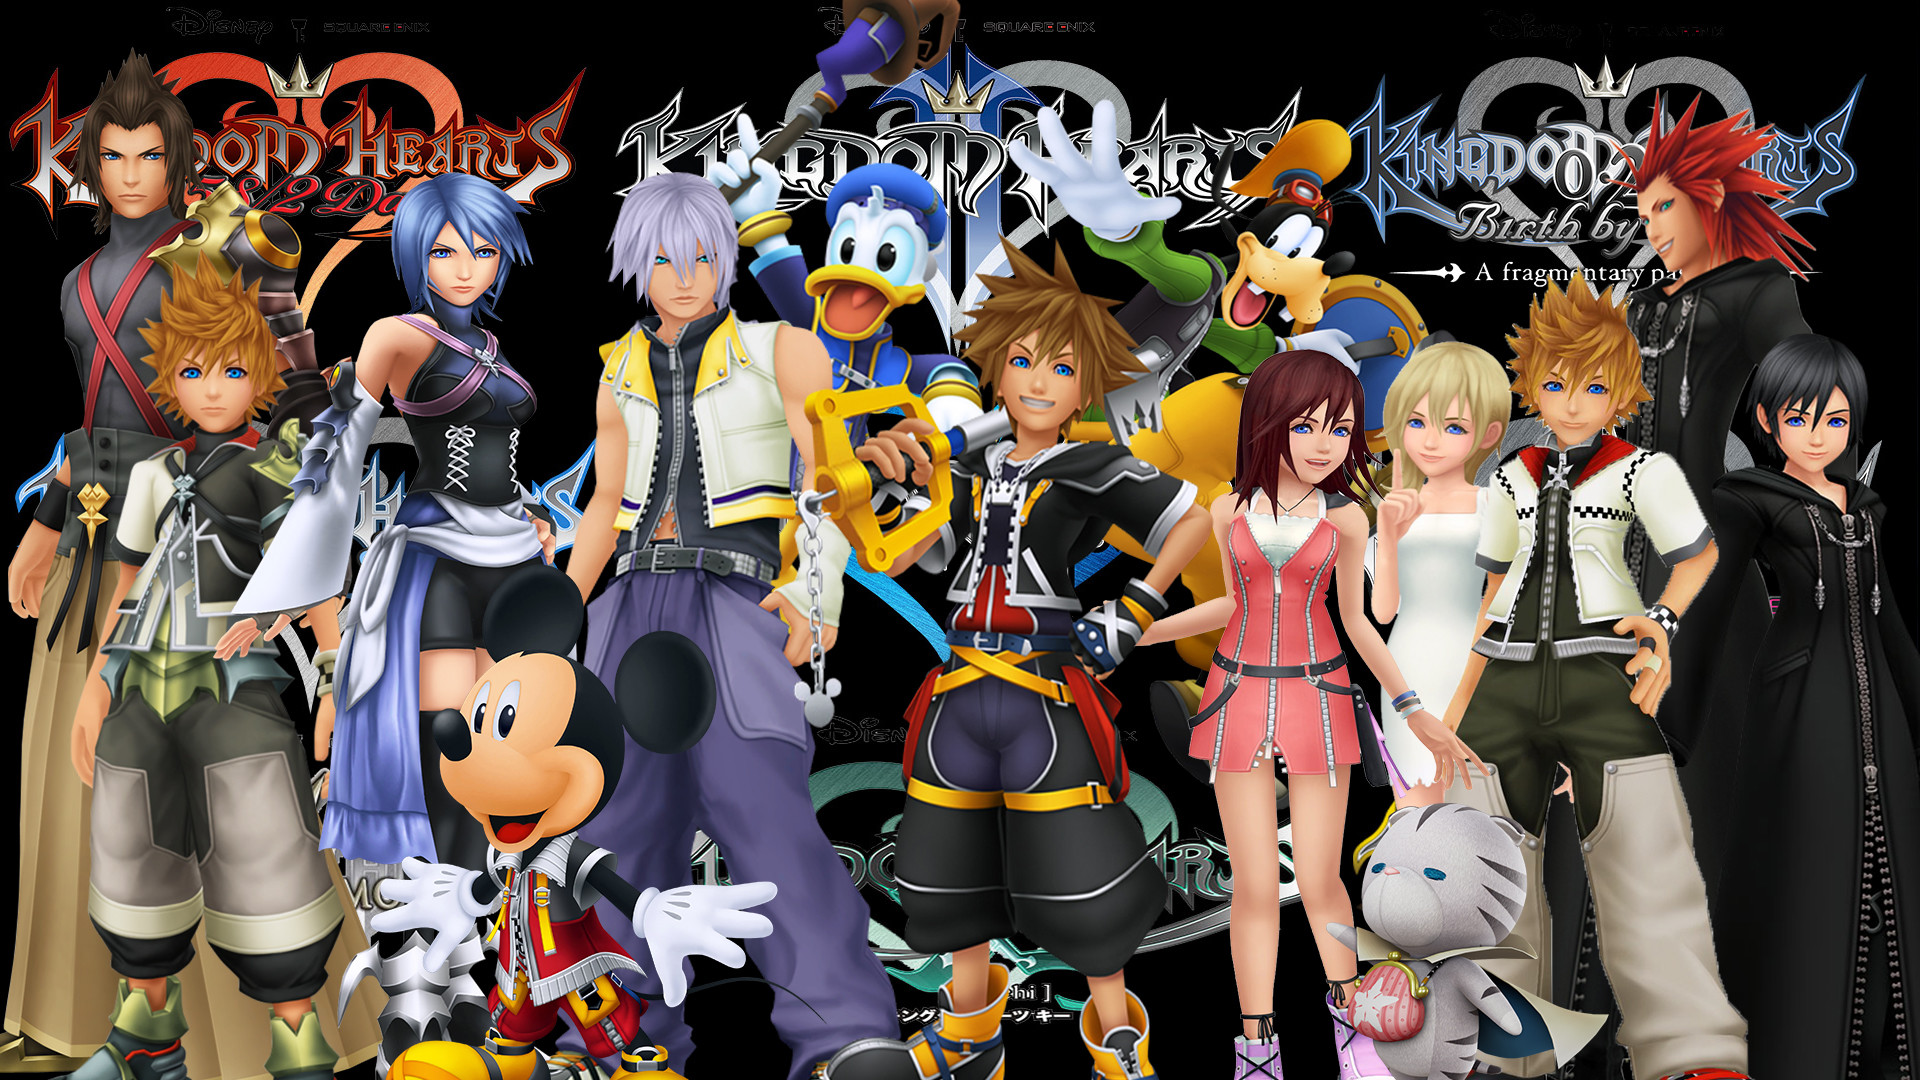 1920x1080 ... Kingdom Hearts Saga: Group wallpaper by The-Dark-Mamba-995